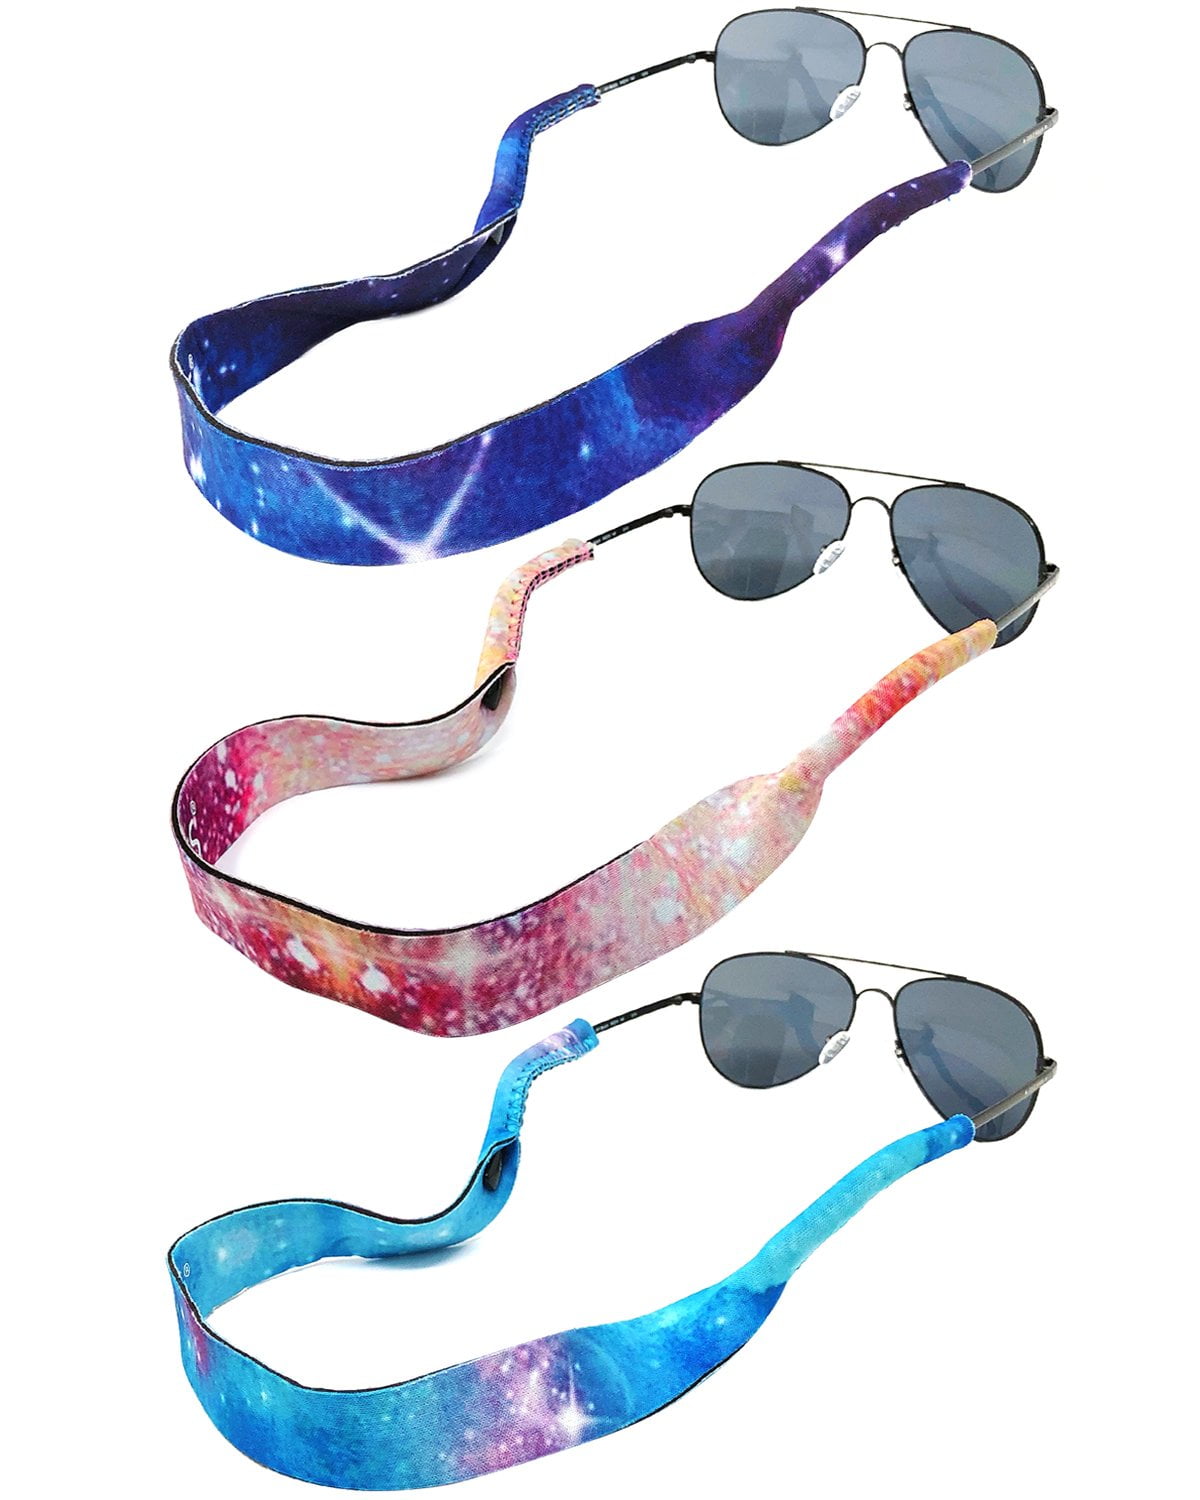 Floating Universal Sunglasses retainer straps Neoprene 7pcs set